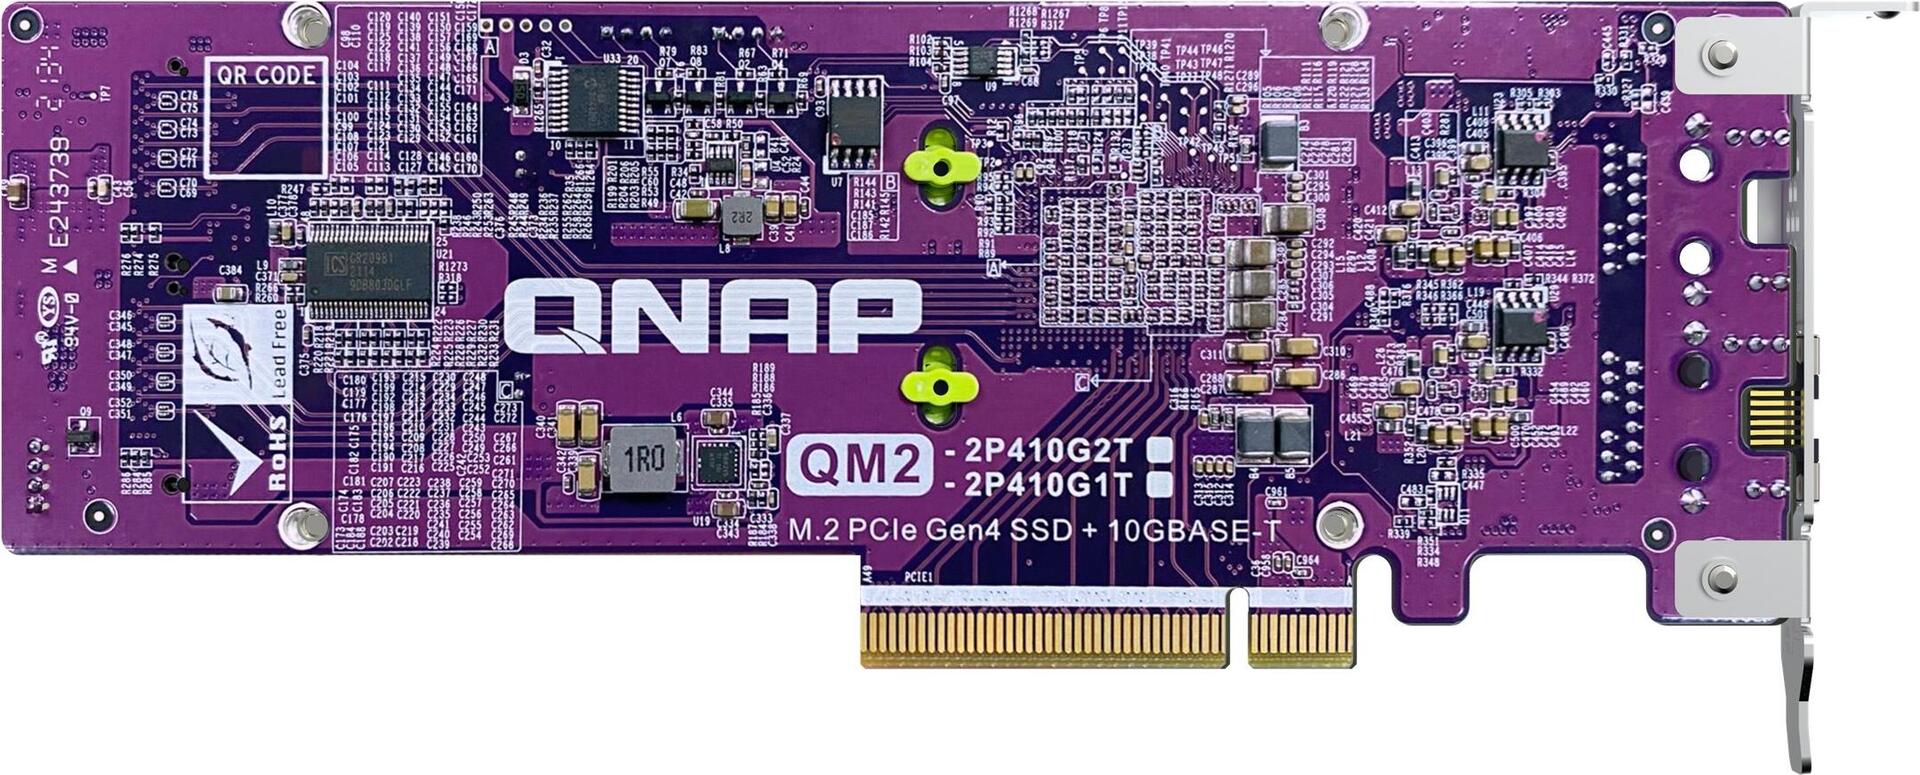 QNAP Card QM2 series 2xPCIe 2280 M.2 SSD slots PCIe Gen4x8 1xAQC113C 10GbE NBASE-T port